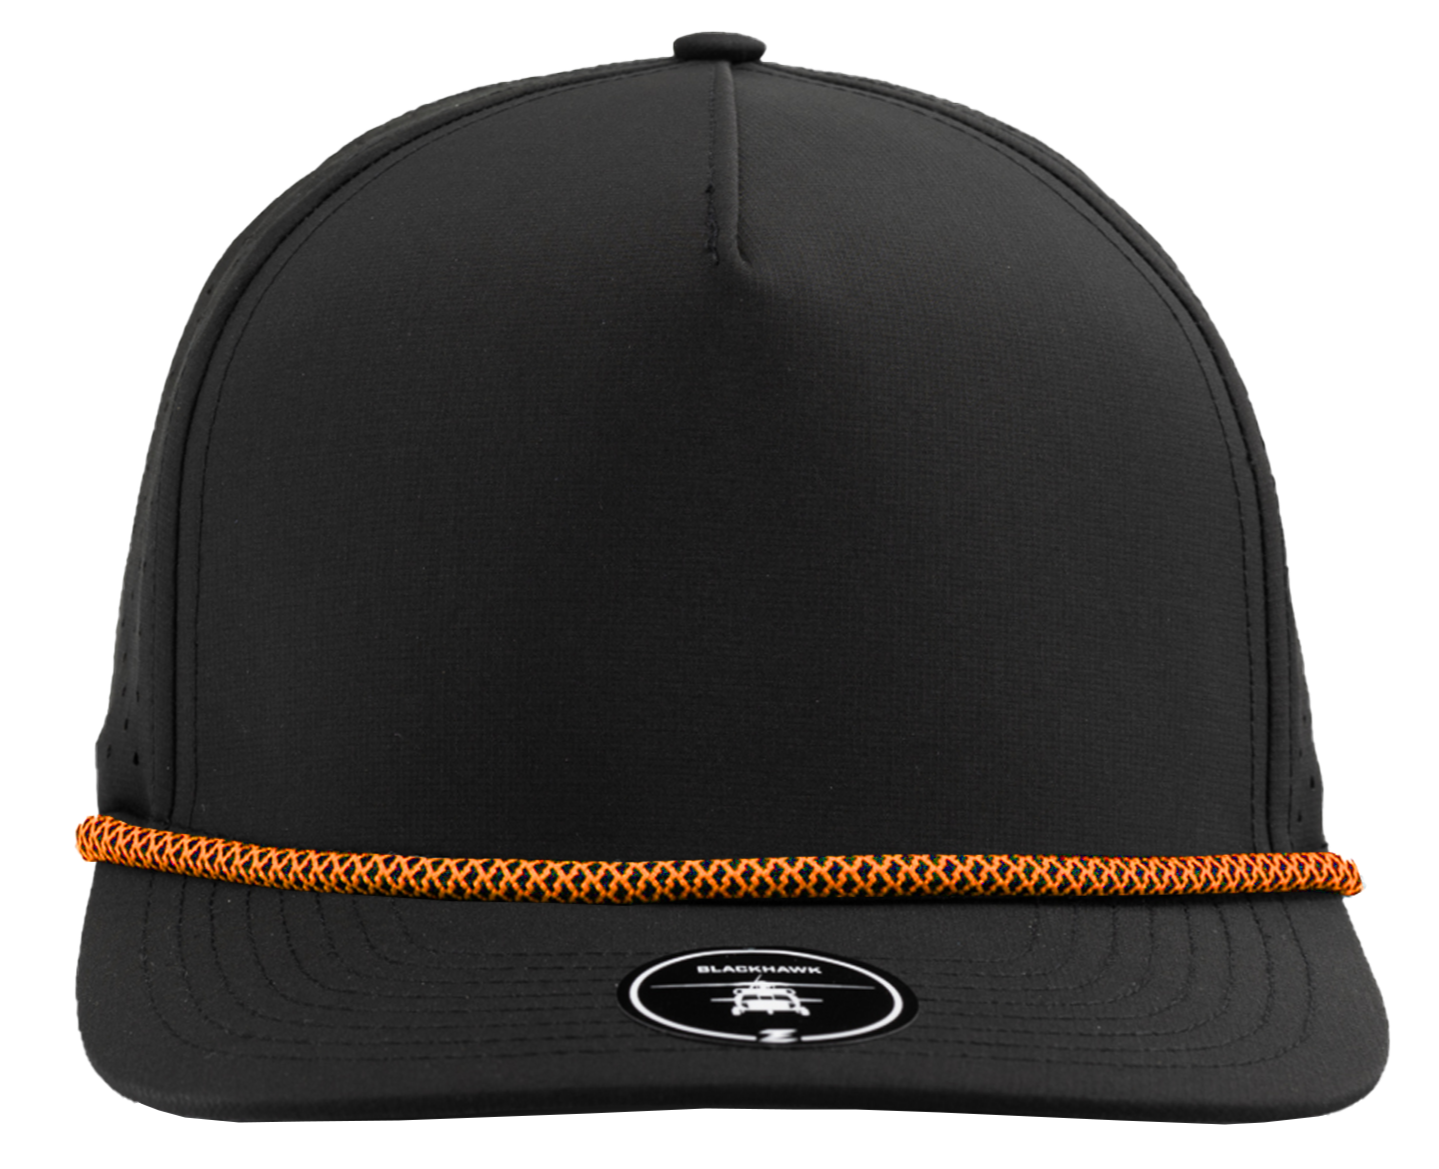 BLACKHAWK R+ (Rope Brim)-Water Repellent hat-Zapped Headwear-Black/ Orange Chainlink Rope-Zapped Headwear-5 panel - rope hat - golf hat